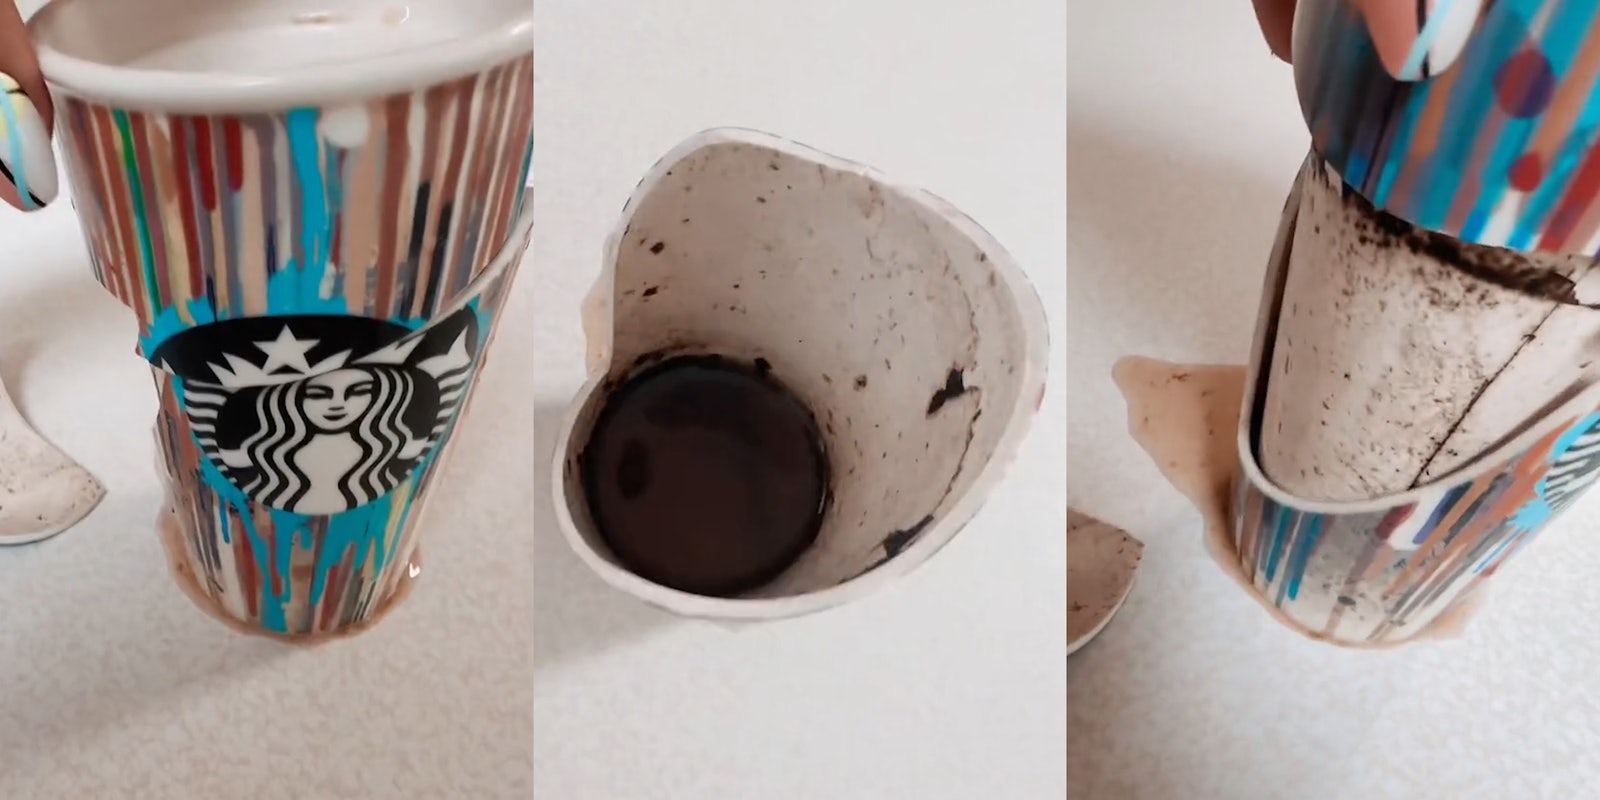 Starbucks ceramic cup on counter broken (l) Starbucks ceramic cup on counter broken to reveal grime (c) Starbucks ceramic cup on counter broken (r)